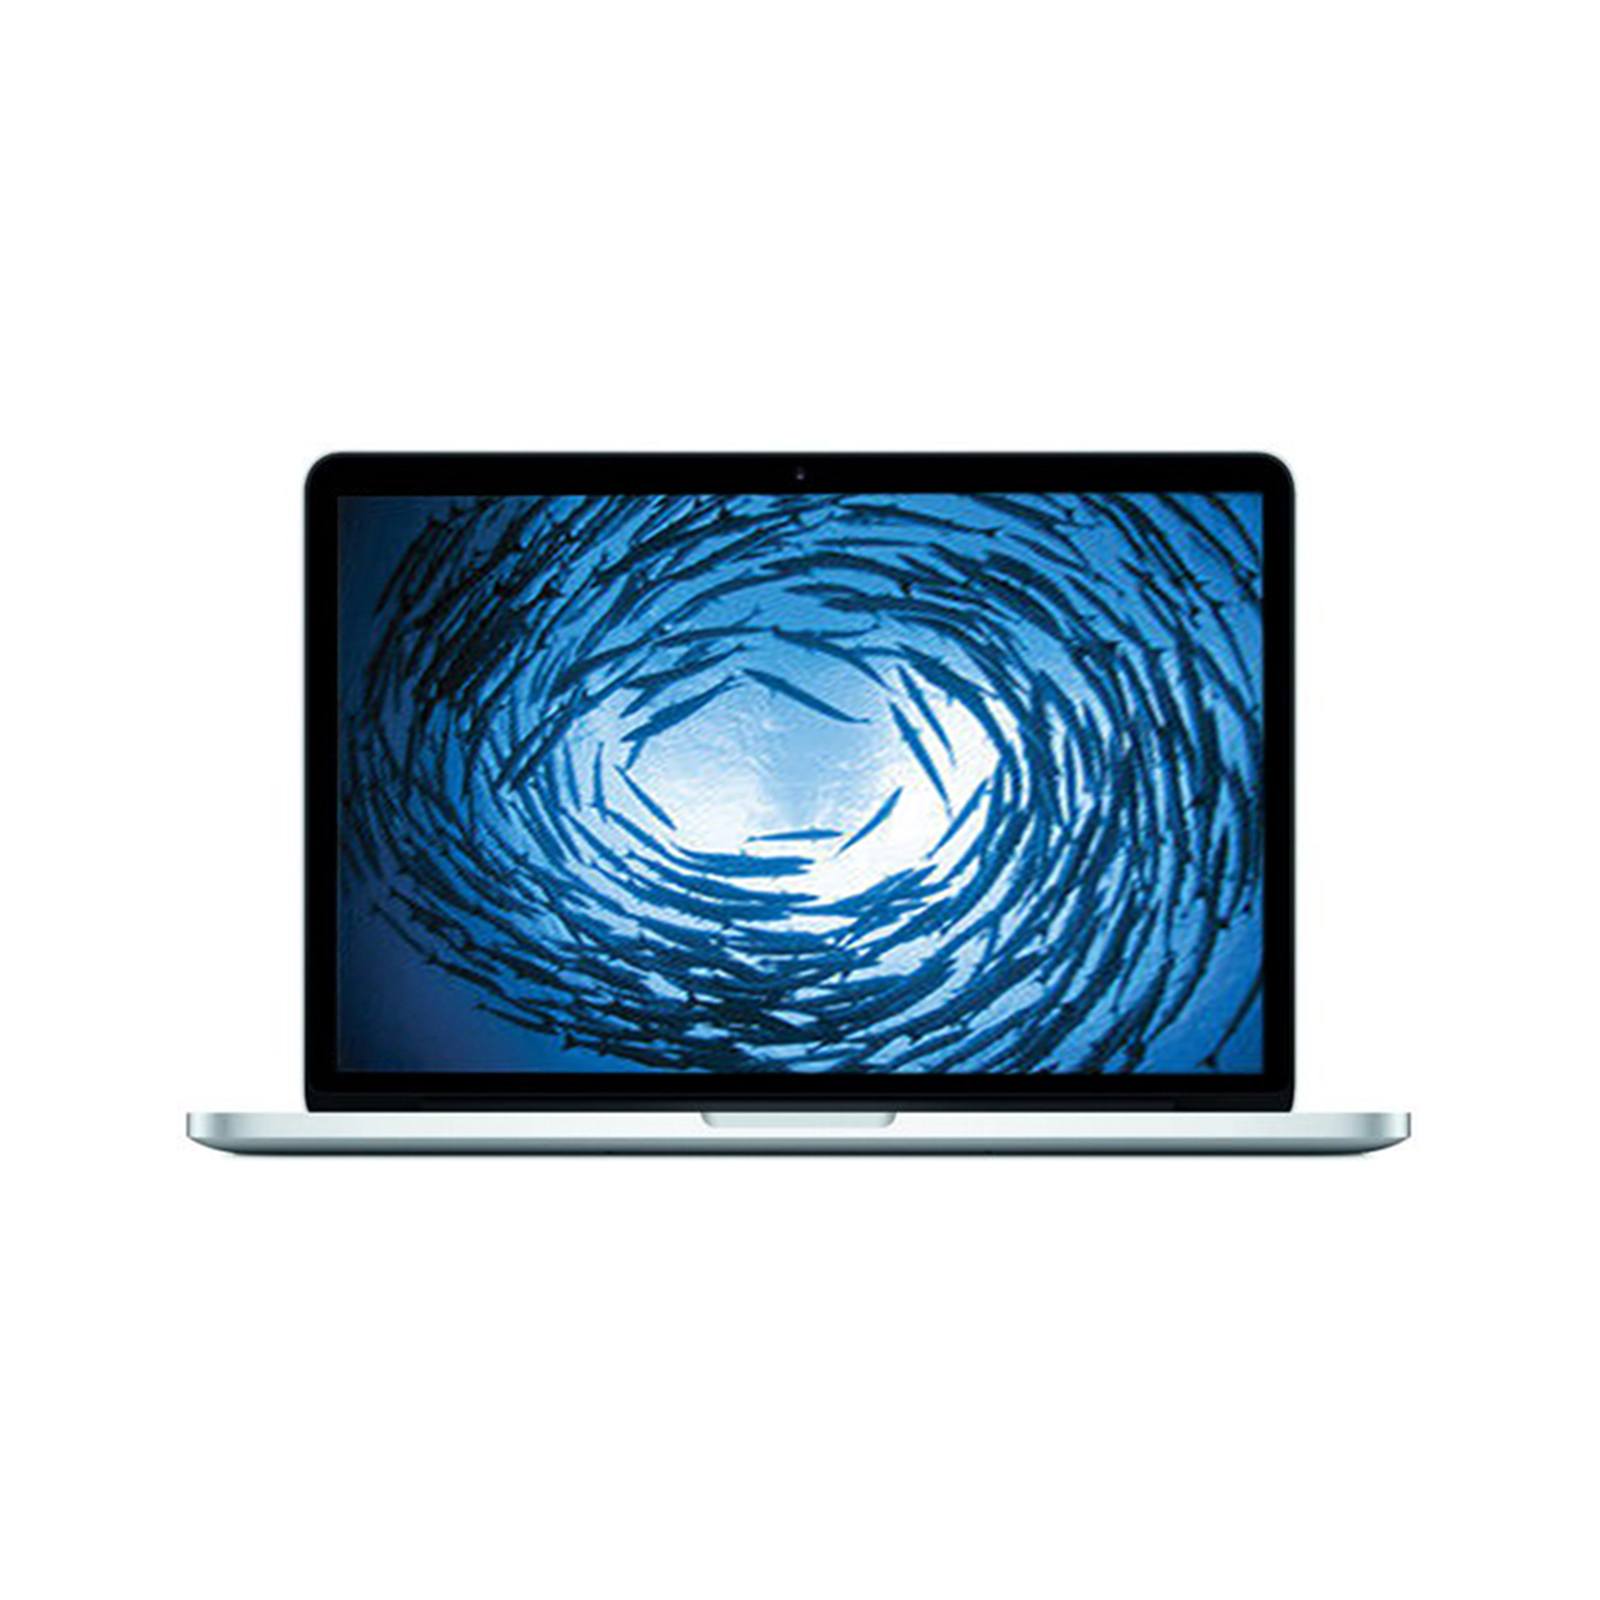 MacBook Pro (Retina, 15-inch, Mid 2014) Intel Core i7 2.5 GHz 16GB 512GB